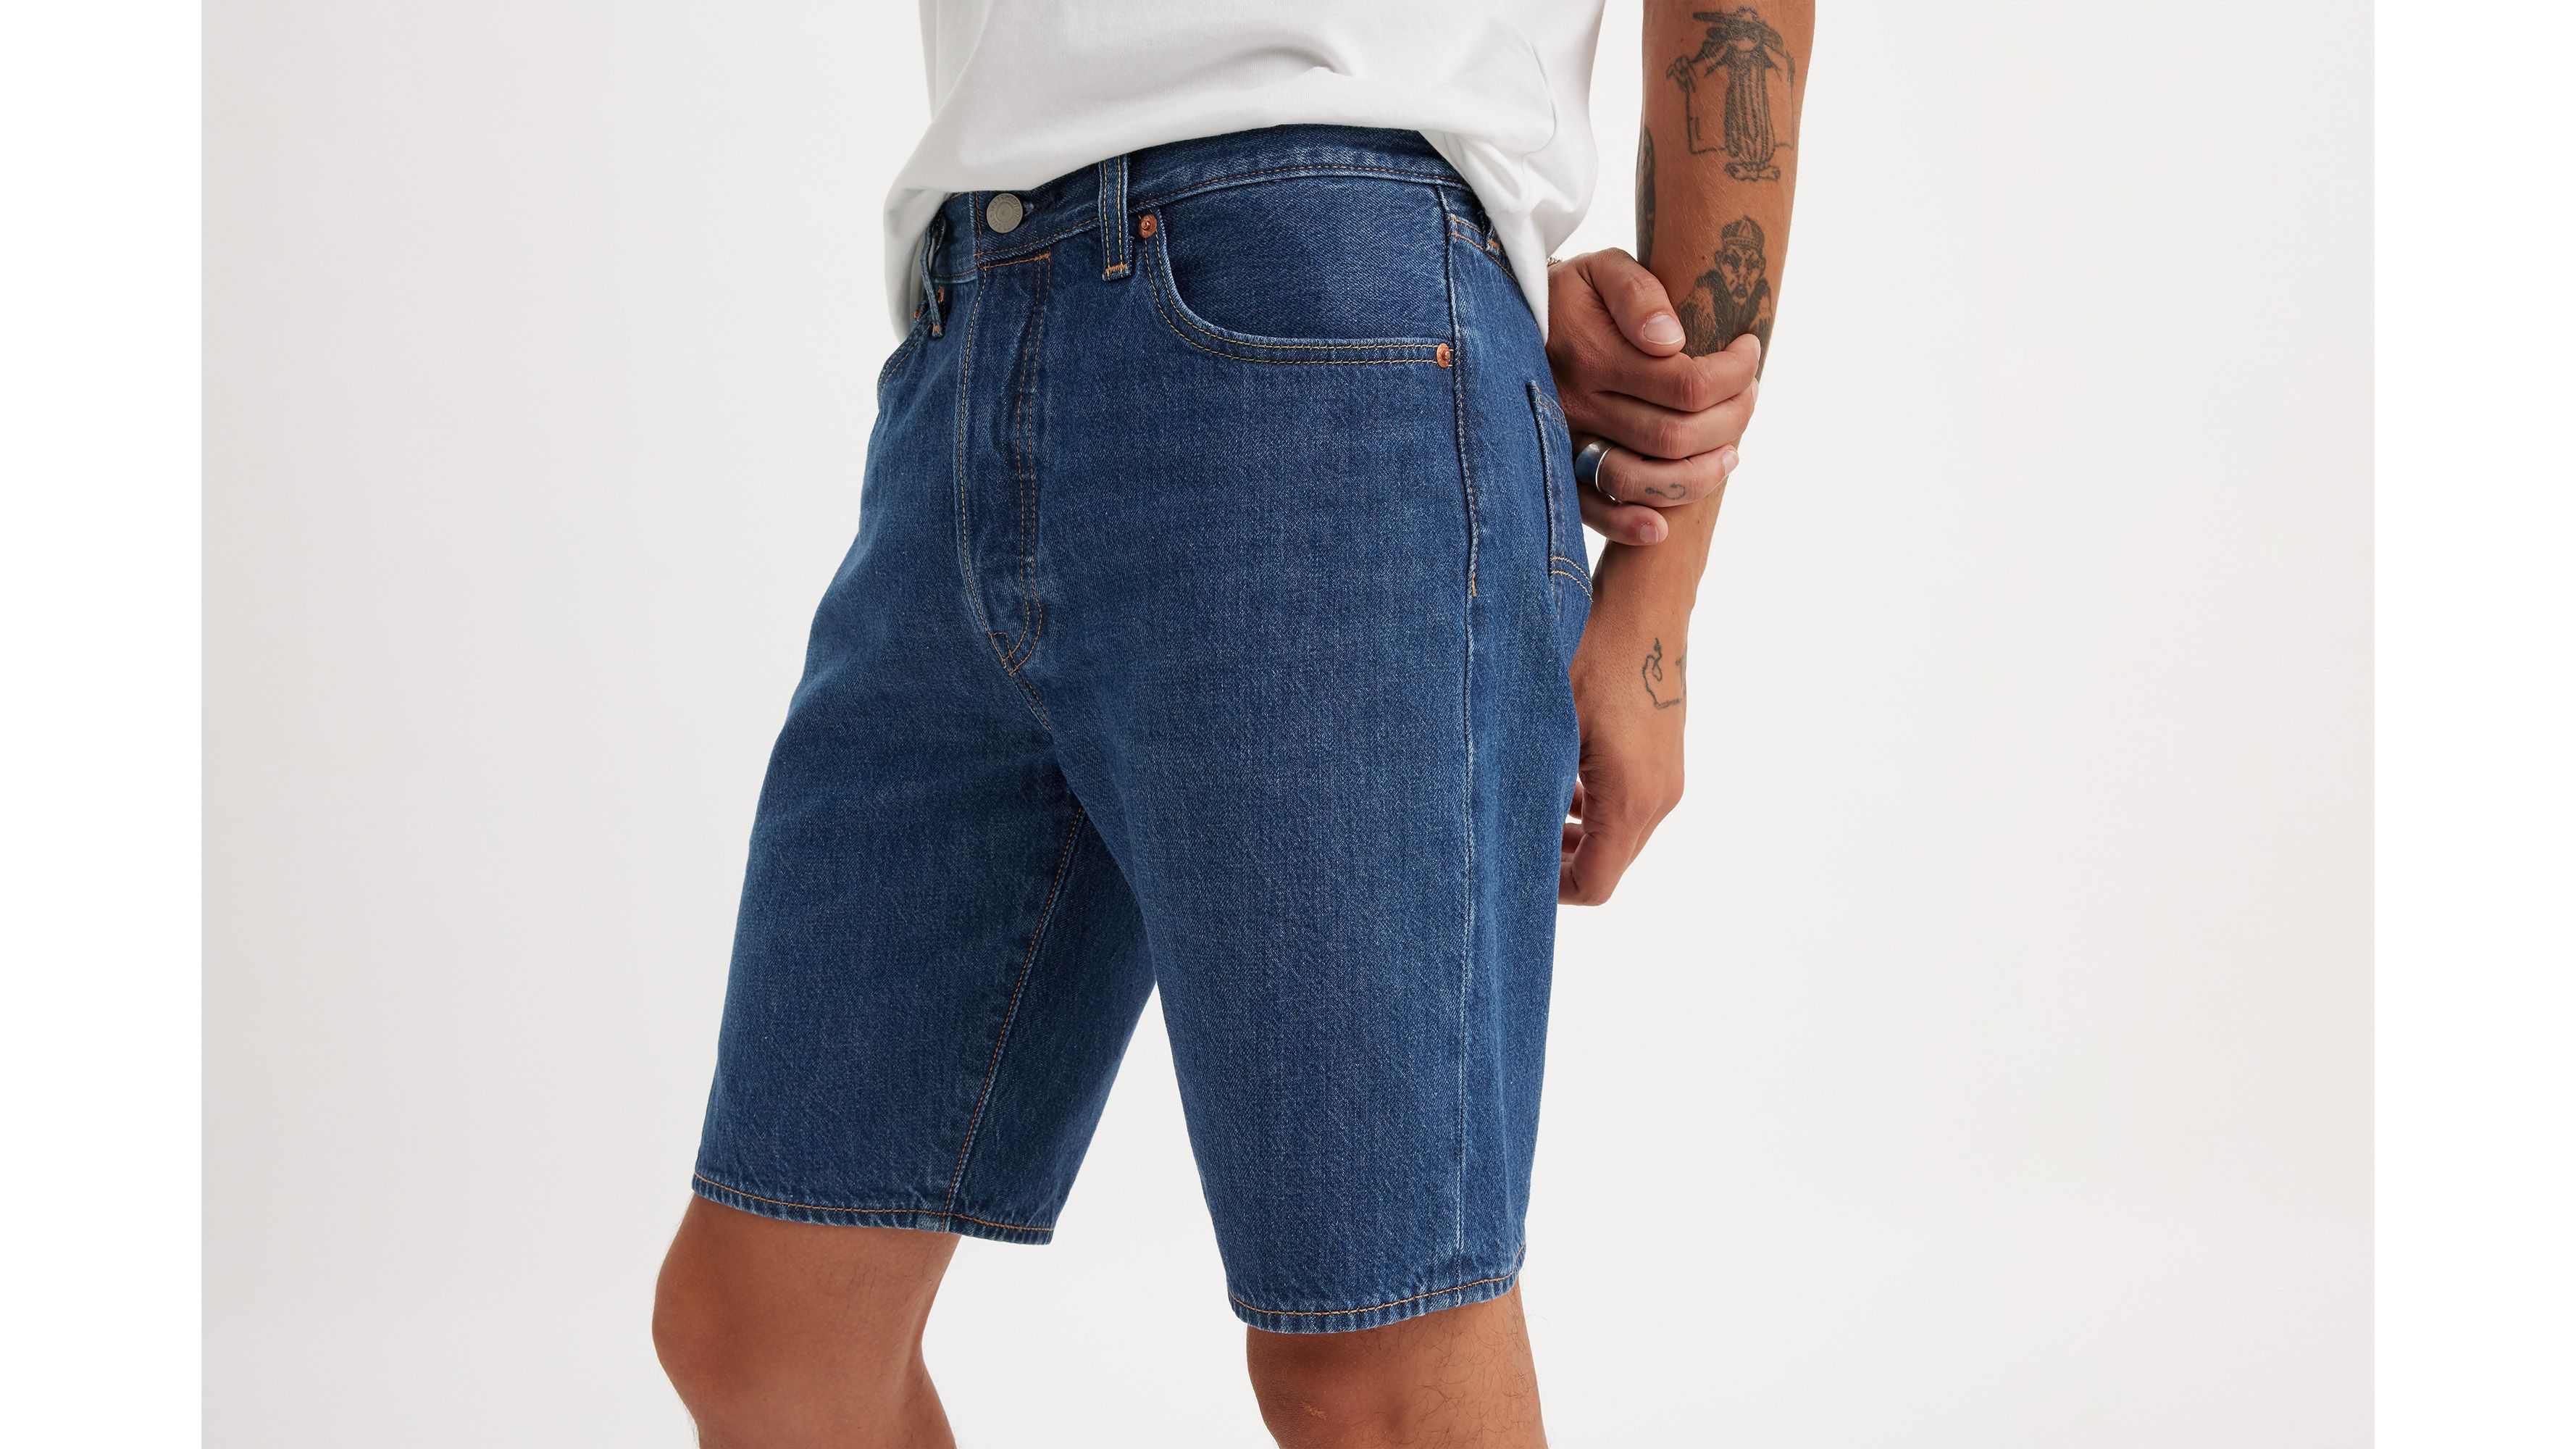 Buy LEVI'S 501 Original Fit Shorts 38x9 - Darkest Spruce At 28% Off